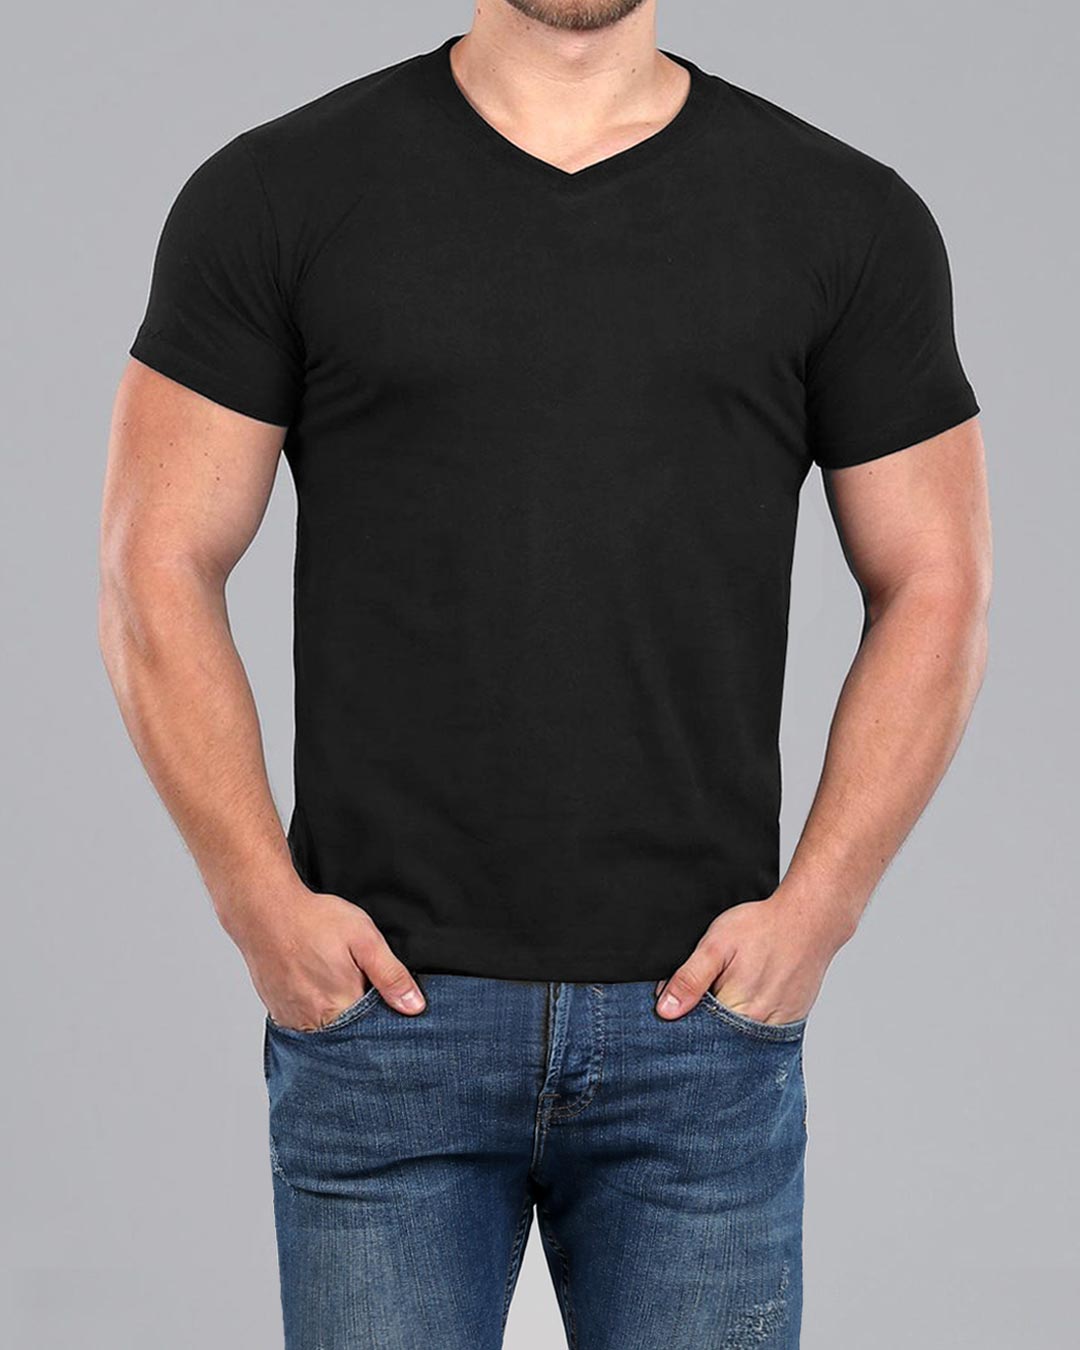 Men's Black V-Neck Fitted T-Shirt Muscle Basics